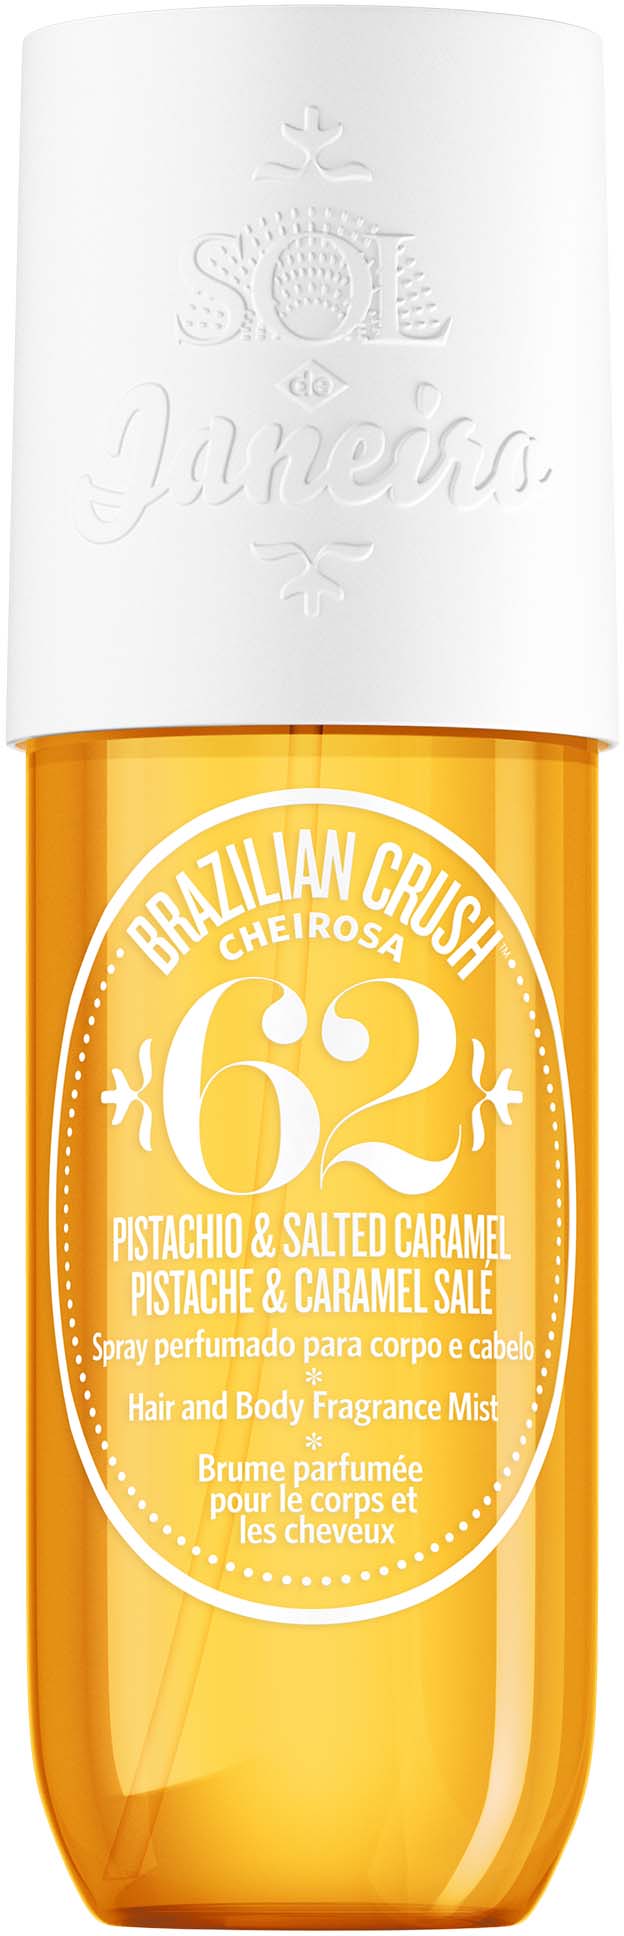 SOL de Janeiro - Brazilian Crush Fragrance Body Mist Cheirosa 87 Rio  Radiance (90 ml) : : Bellezza